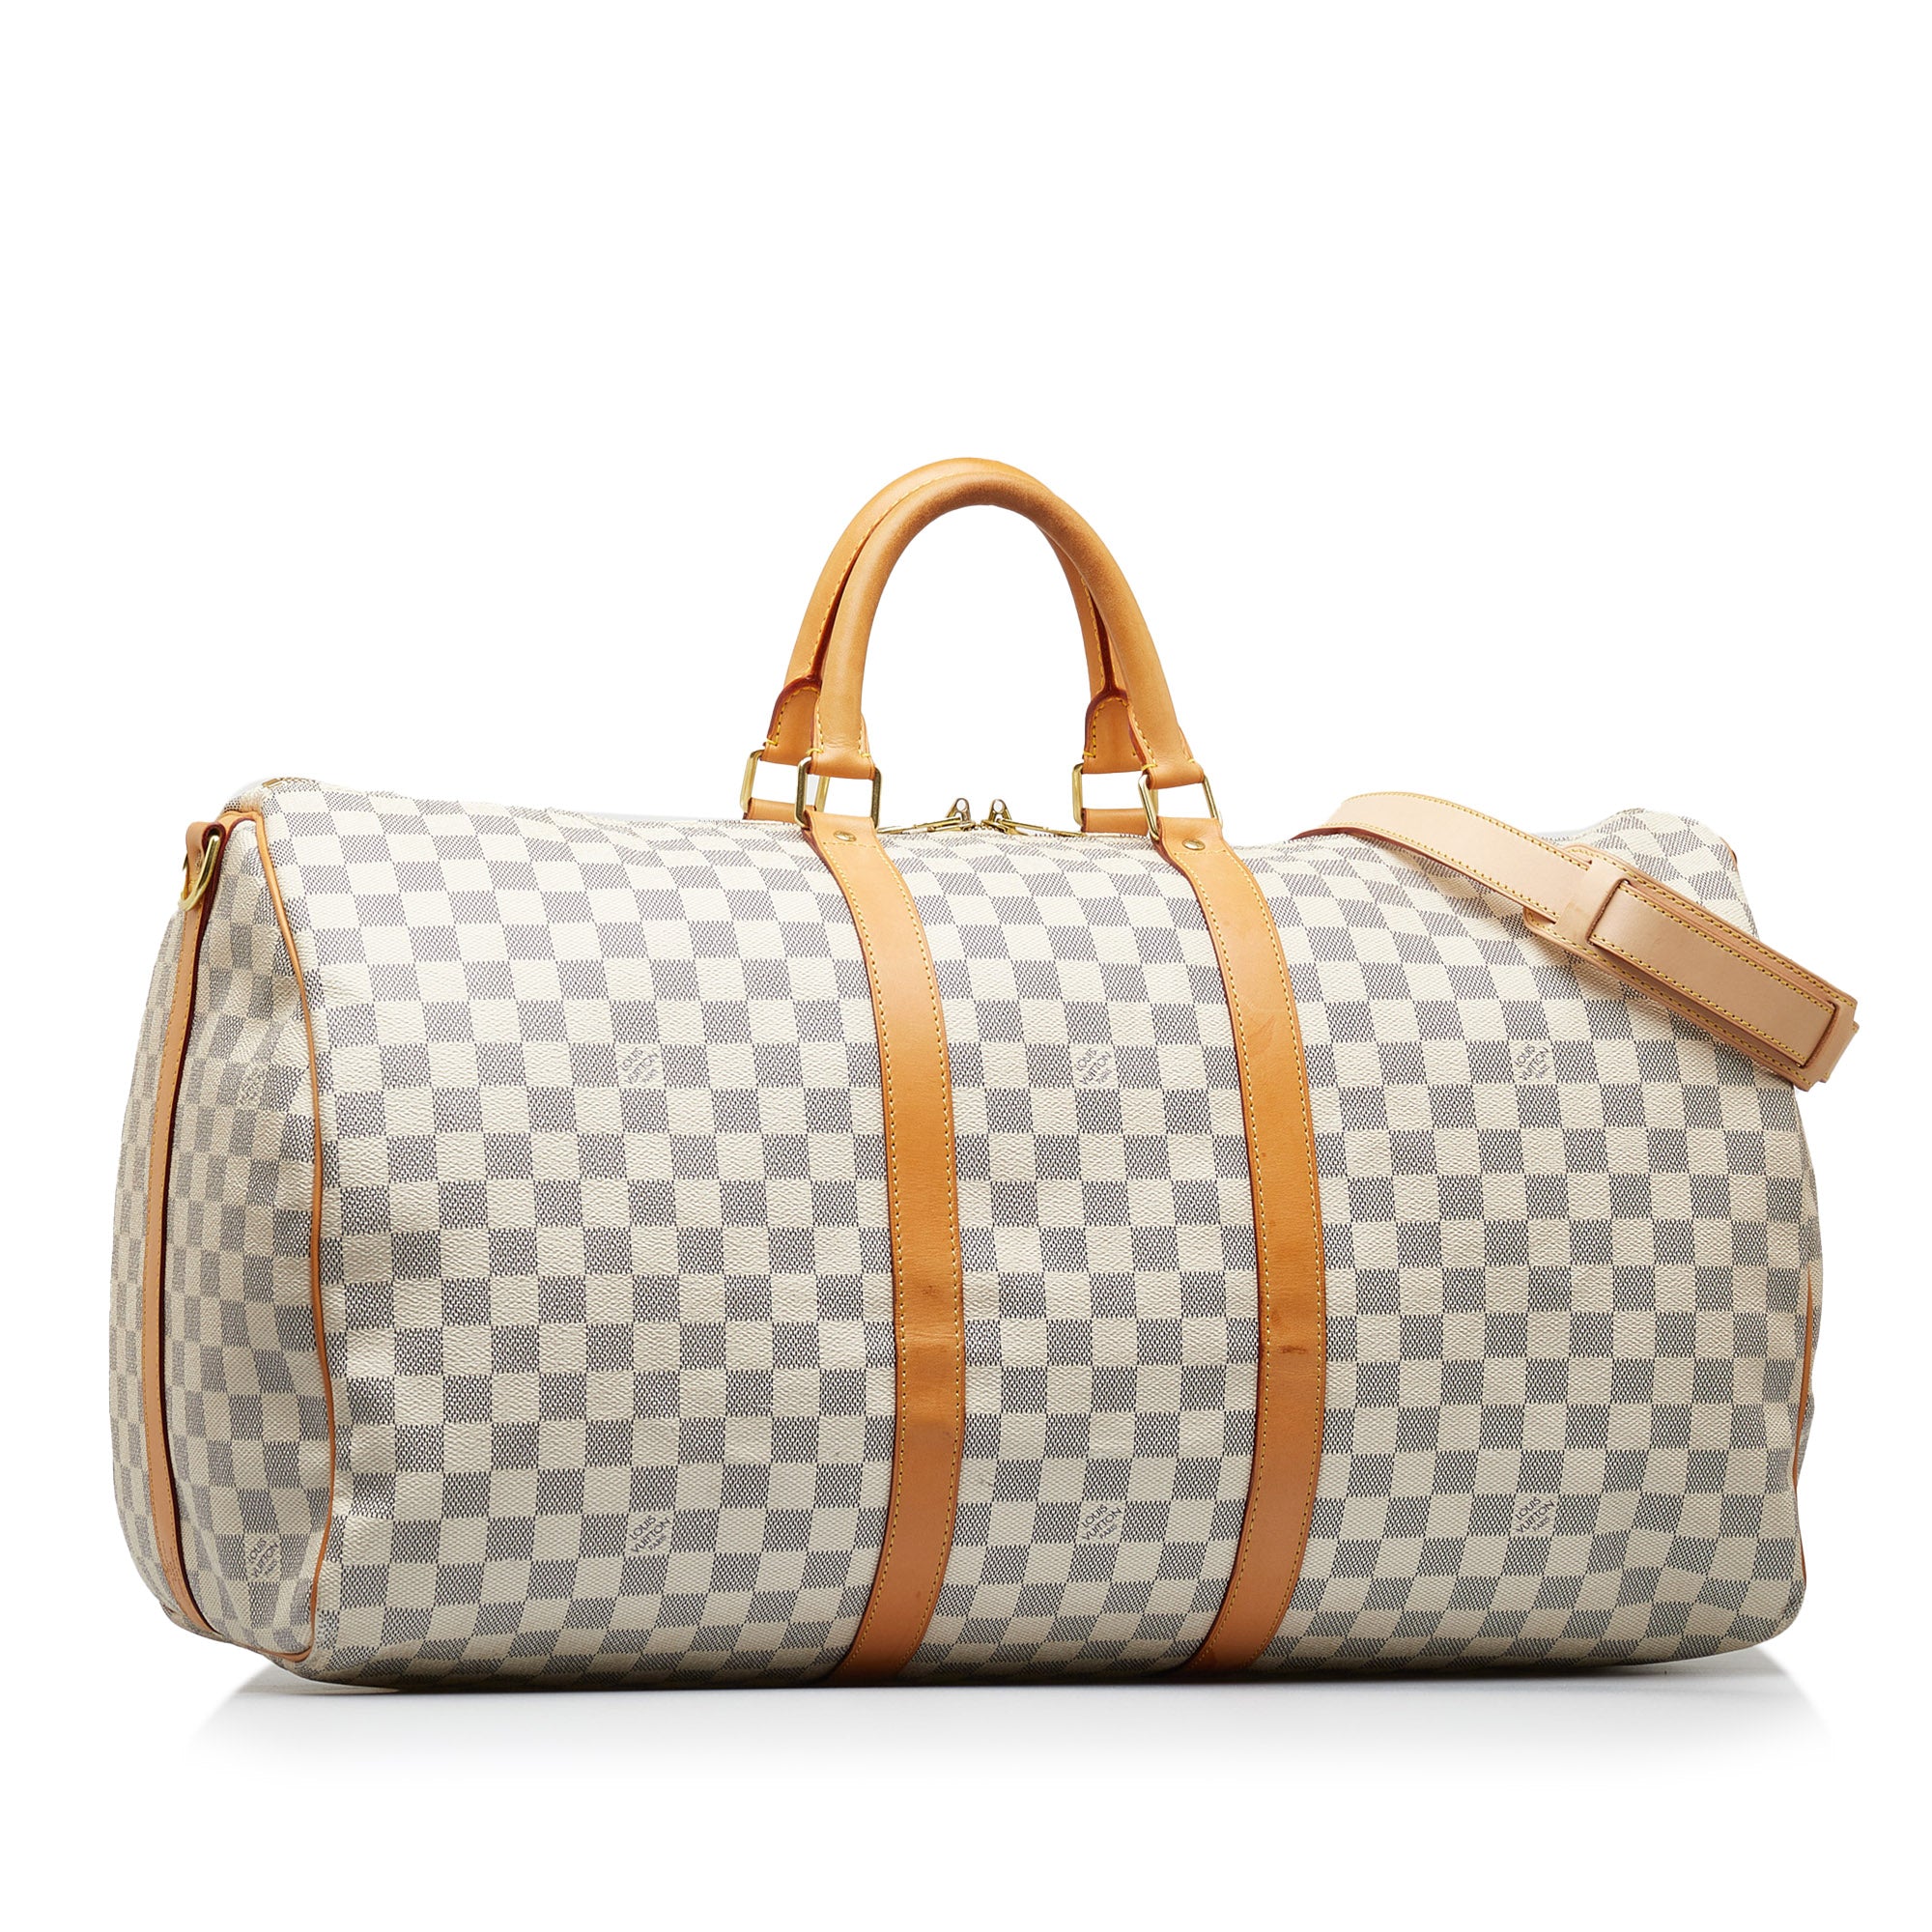 A Louis Vuitton Keepall Bando in Damier Azur is a travel luxury bag th